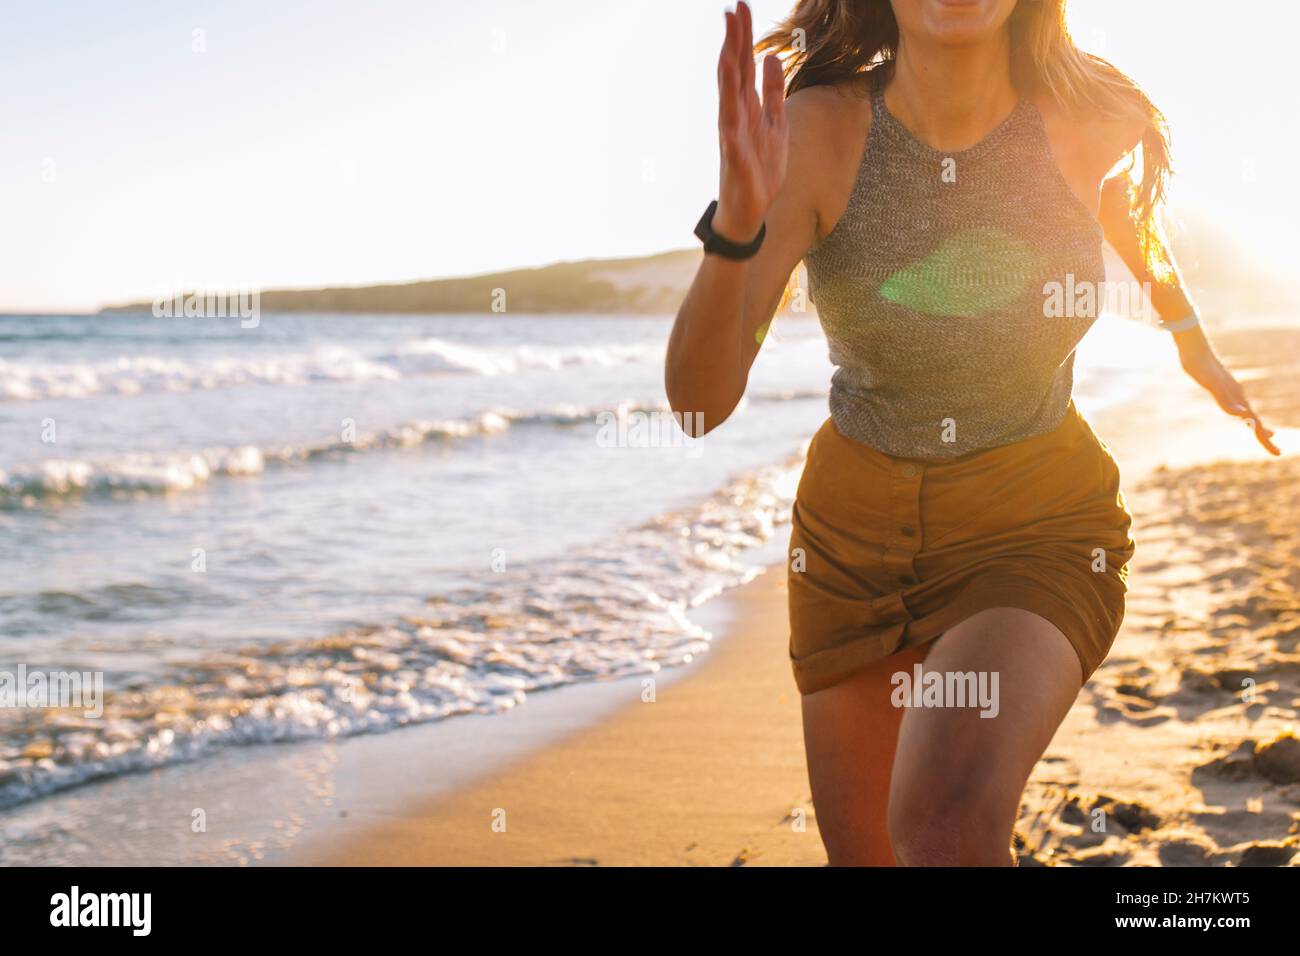 Woman running on shore at beach Stock Photo